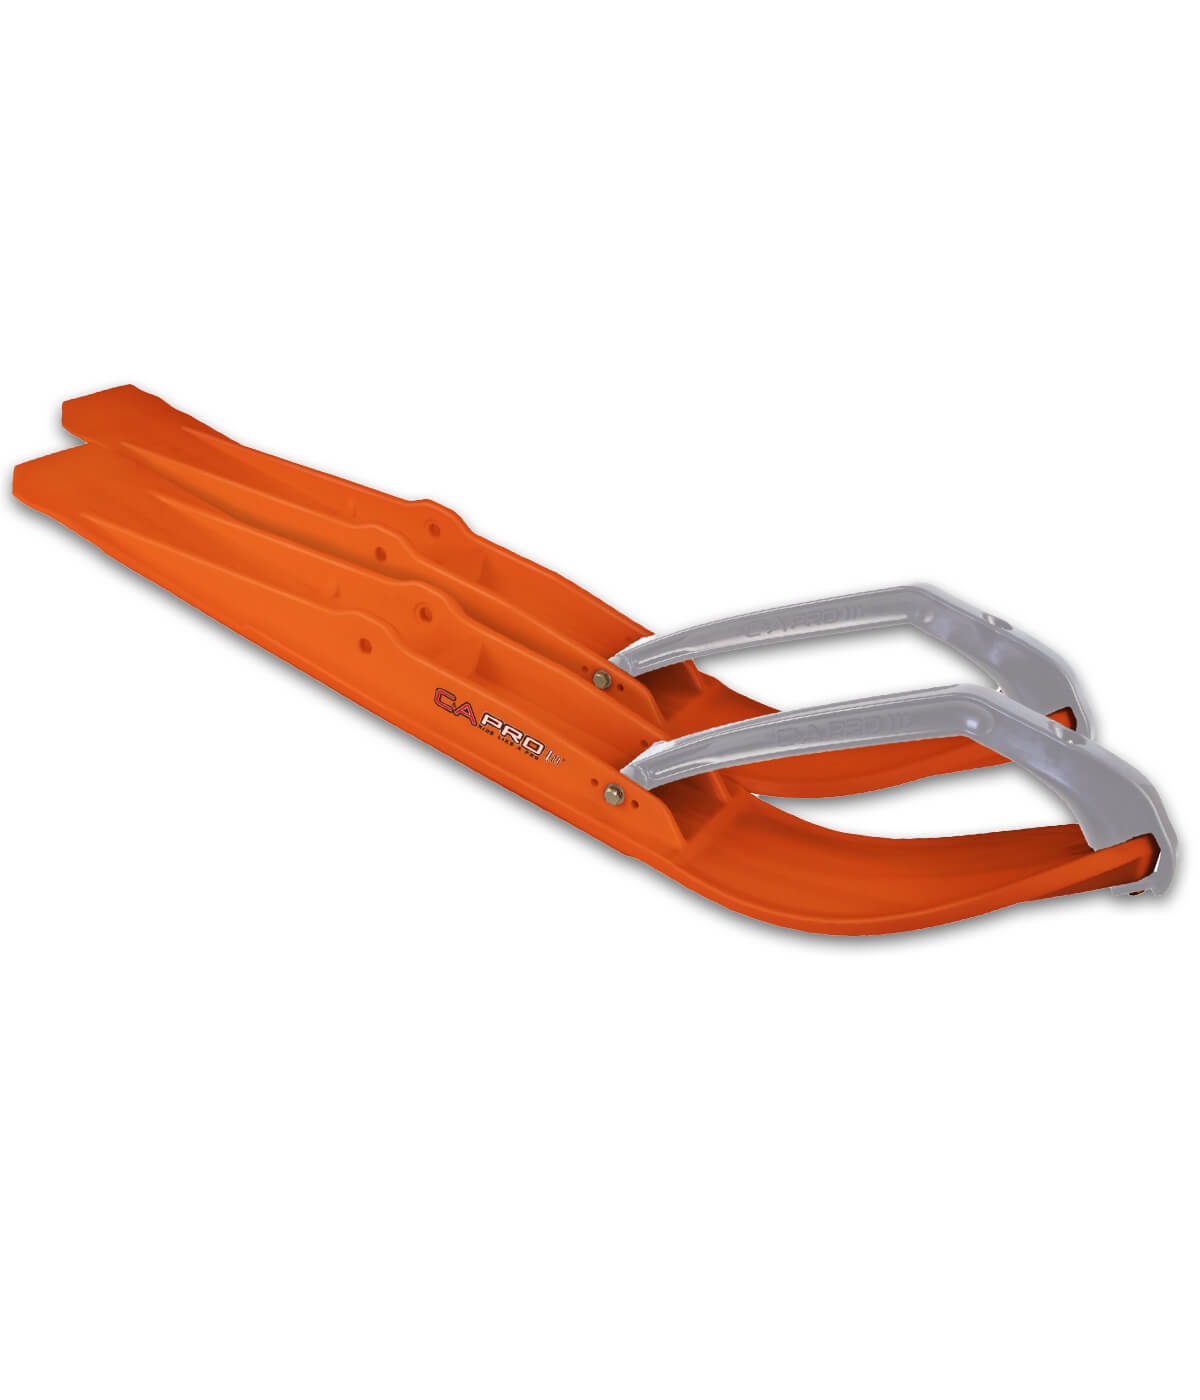 Orange RZ skis with Gray handles